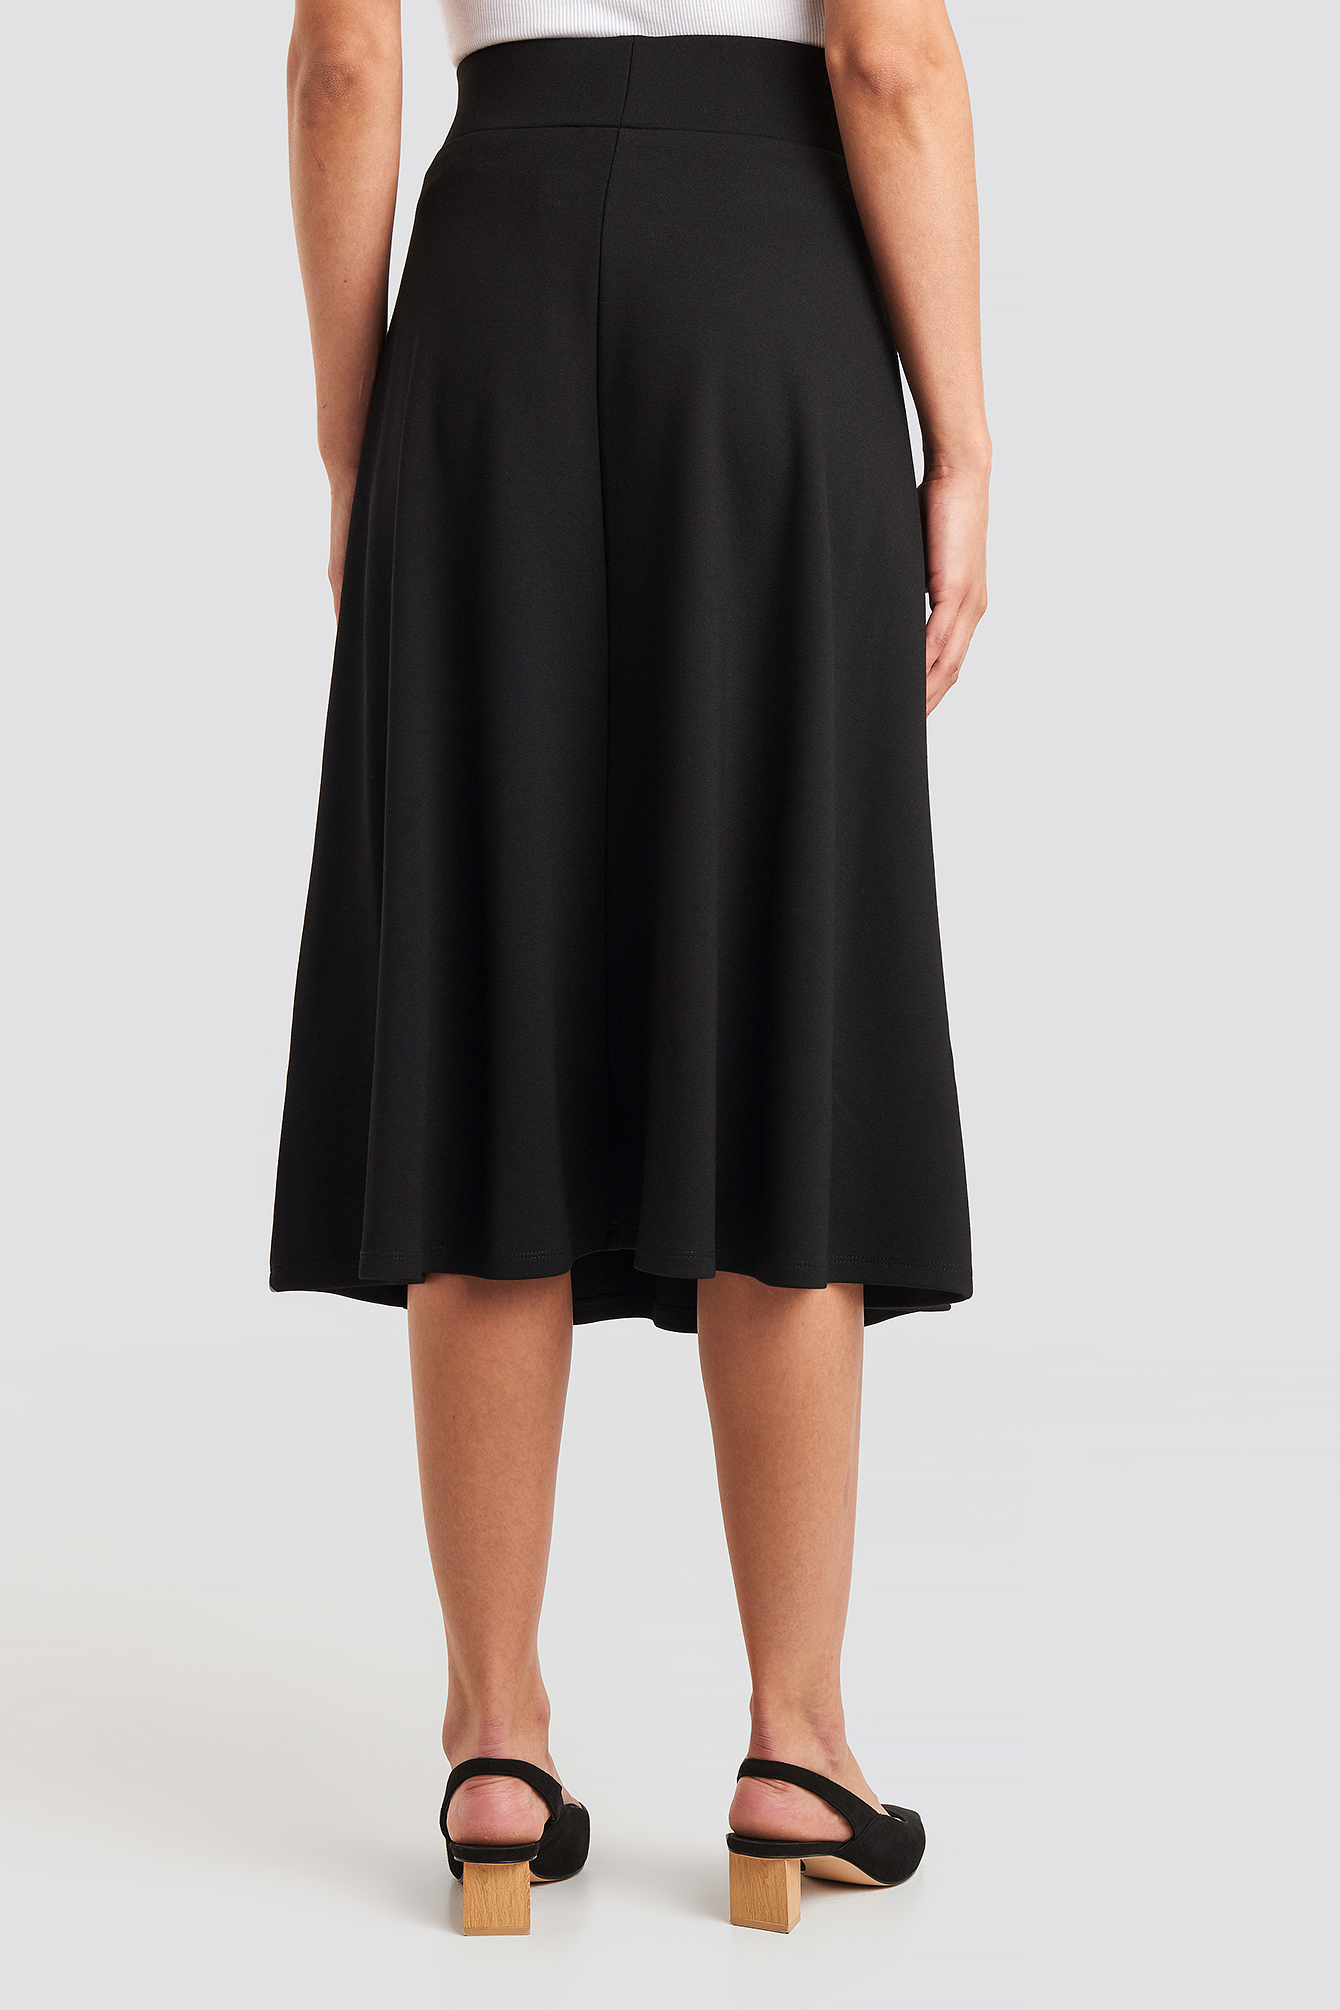 Calvin Klein Chiffon Lined Black Skirt Midi